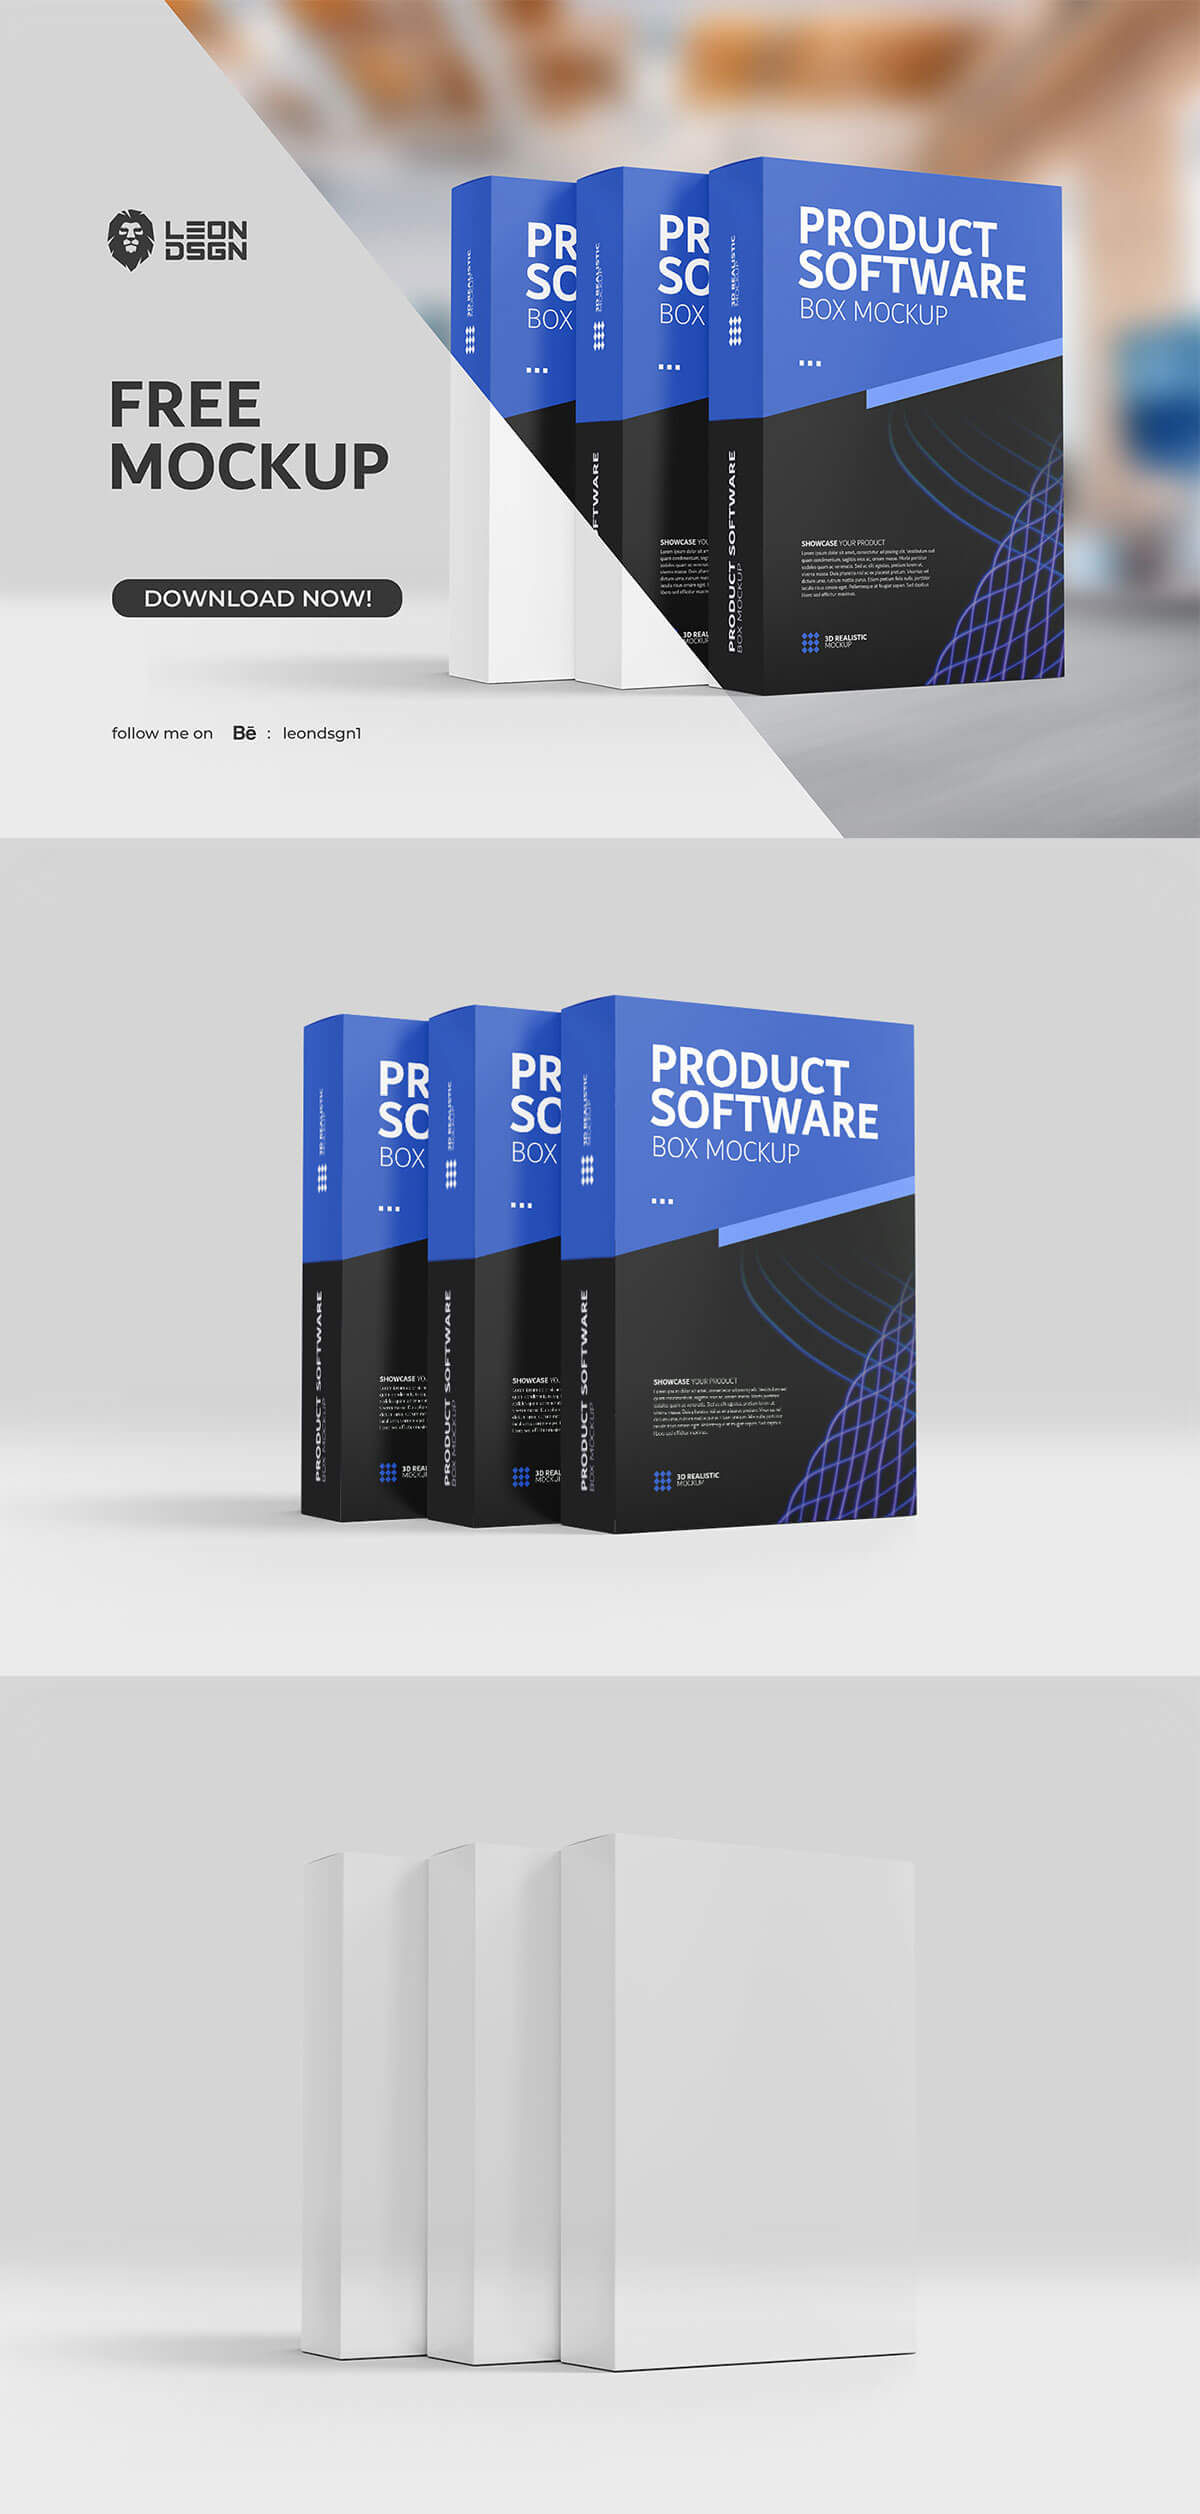 Product Software Box Mockup Free Download